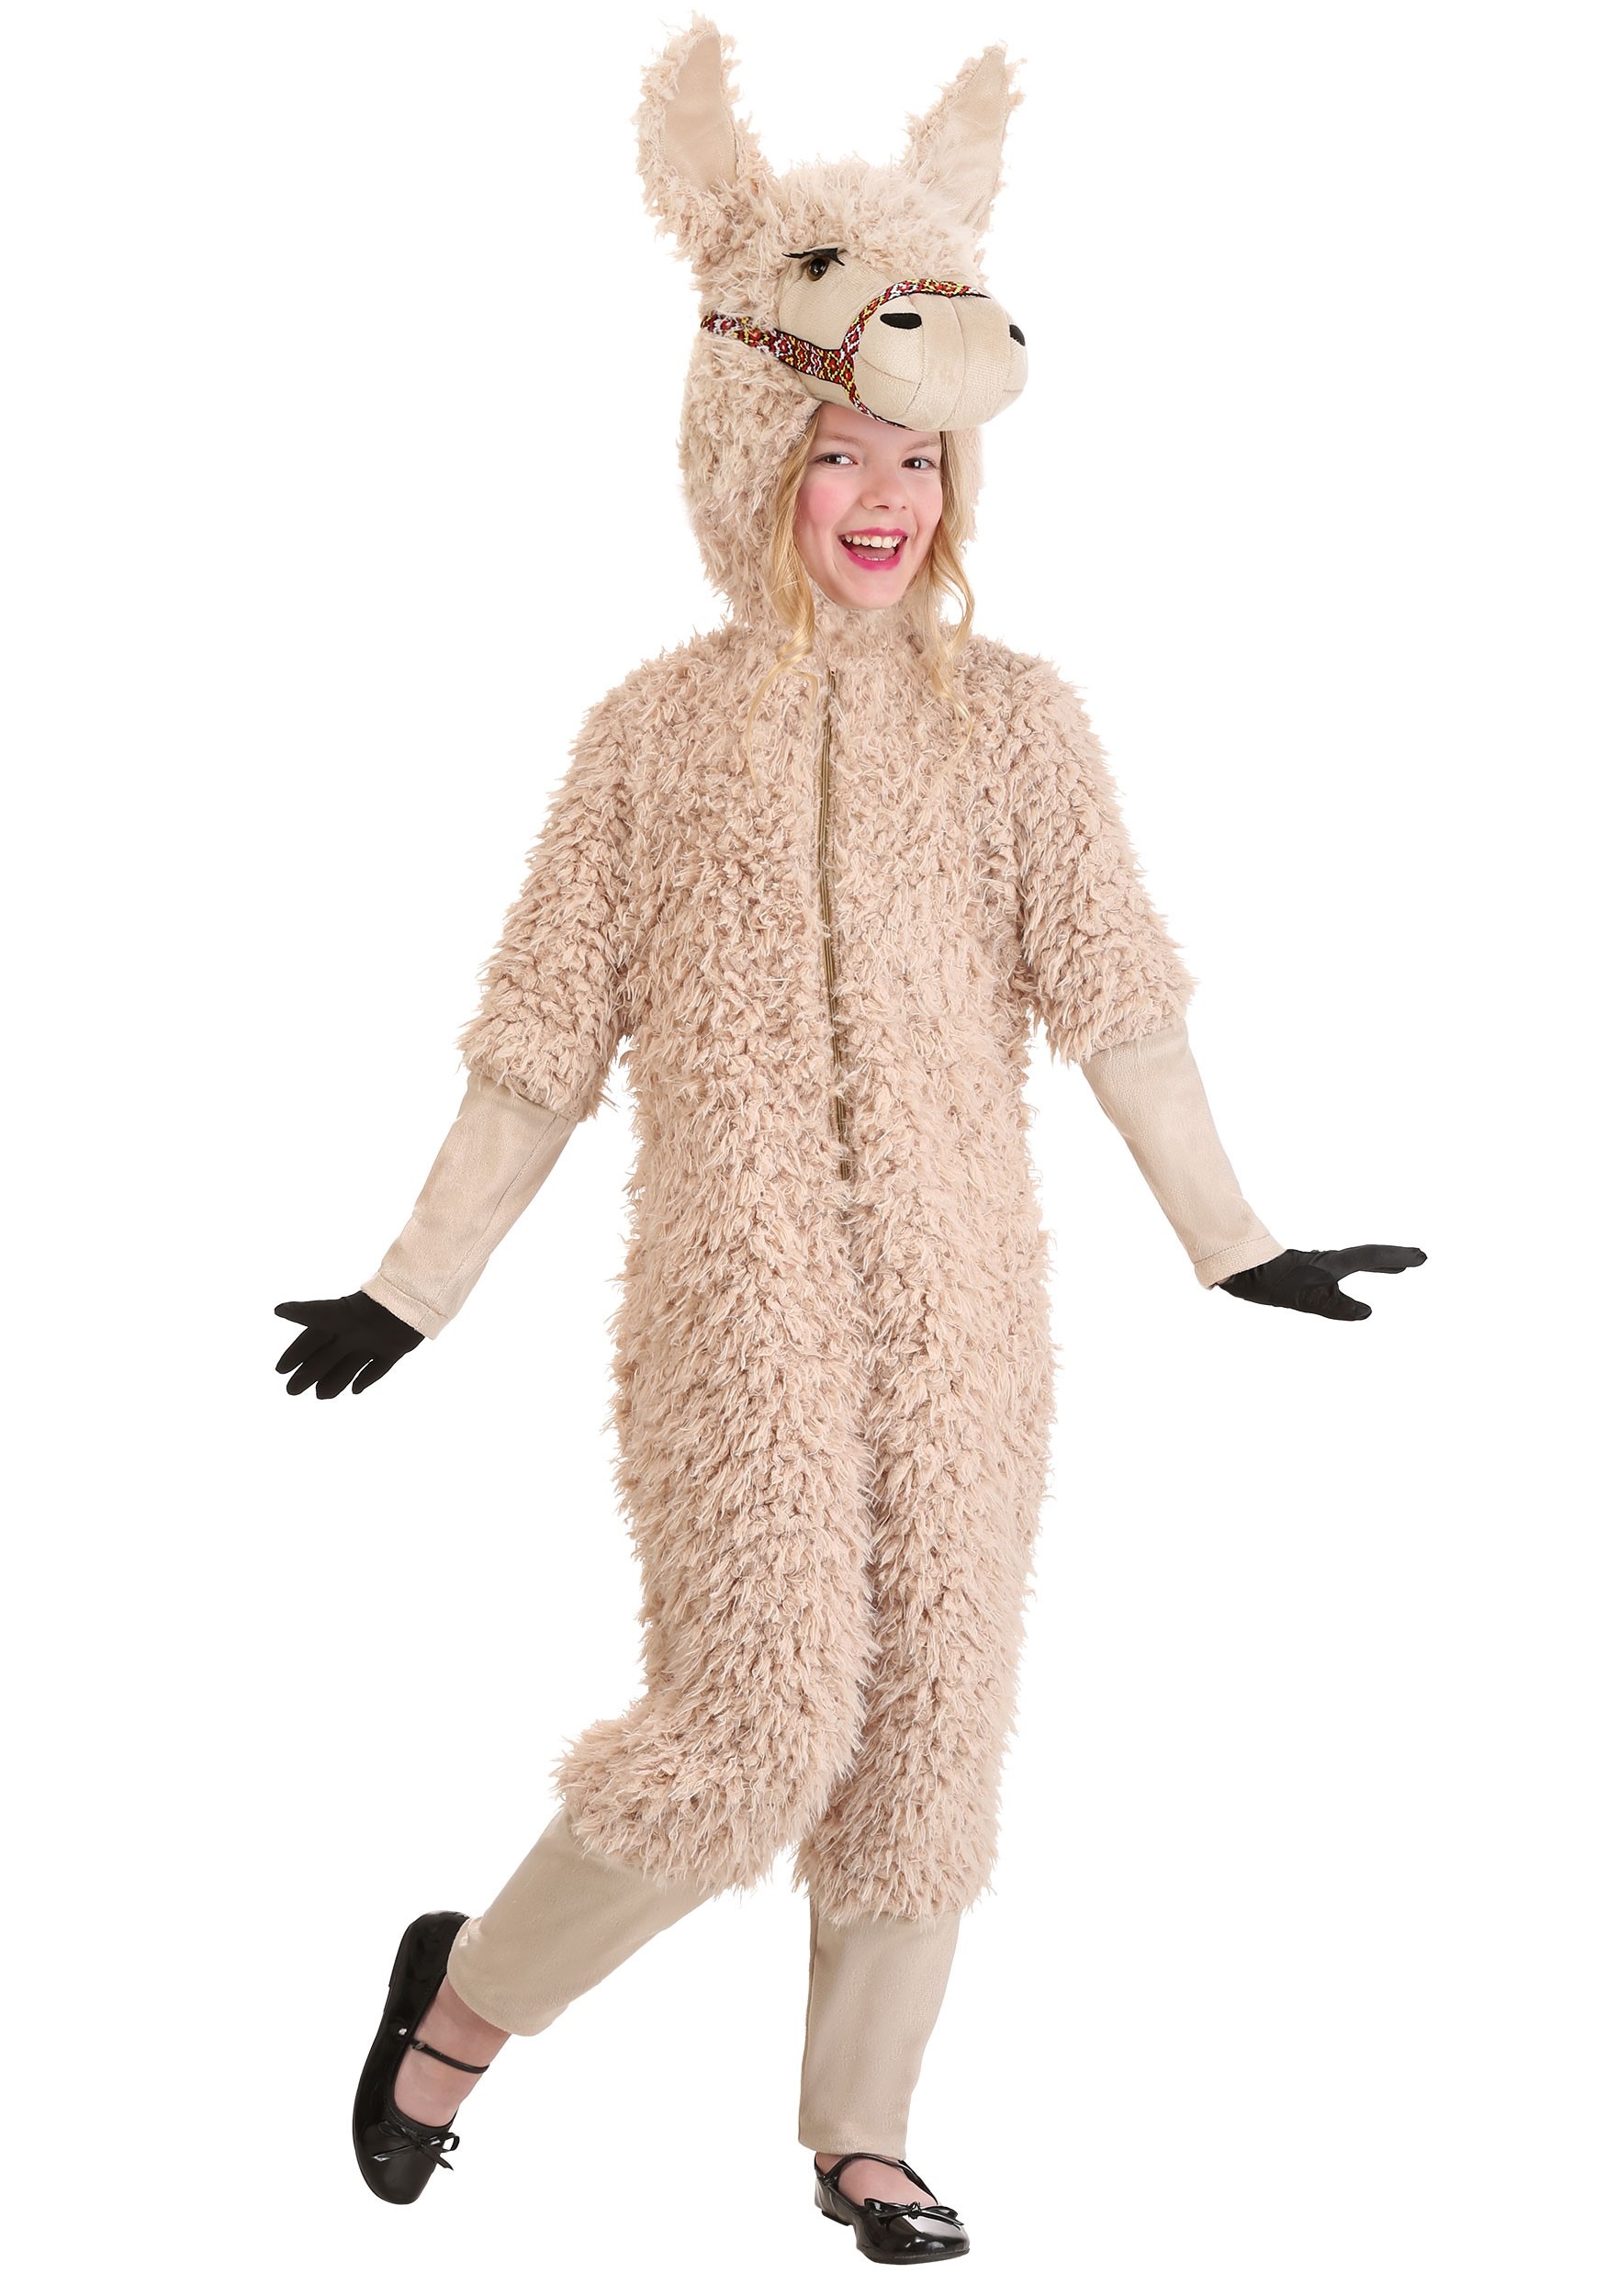 Download Llama Costume For Kids